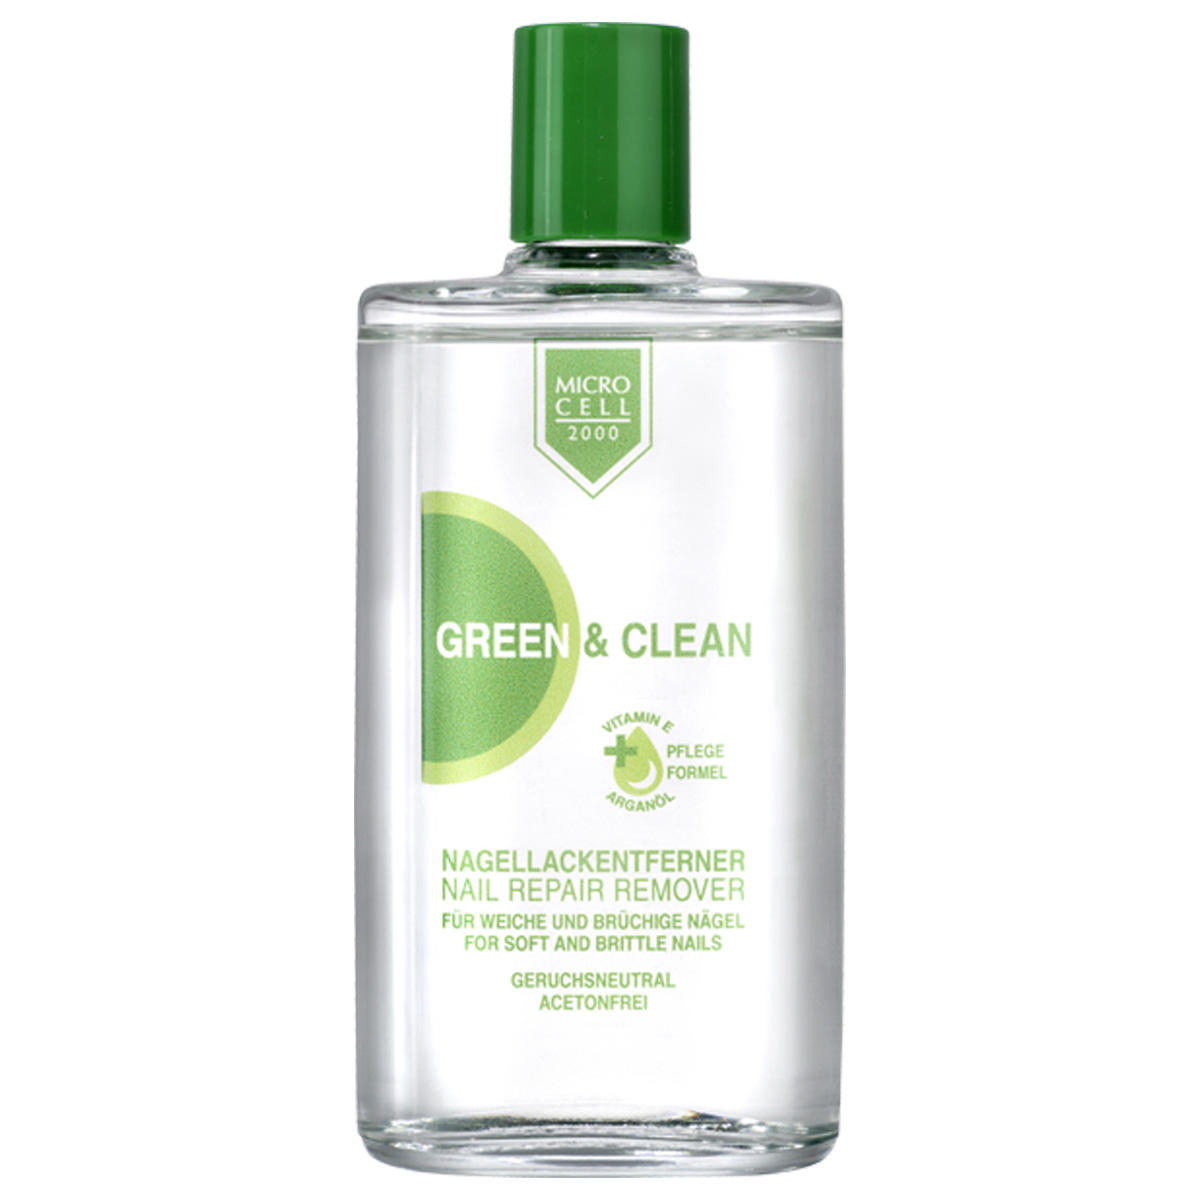 MICRO CELL GREEN & CLEAN NAIL REPAIR REMOVER 100 ml - 1